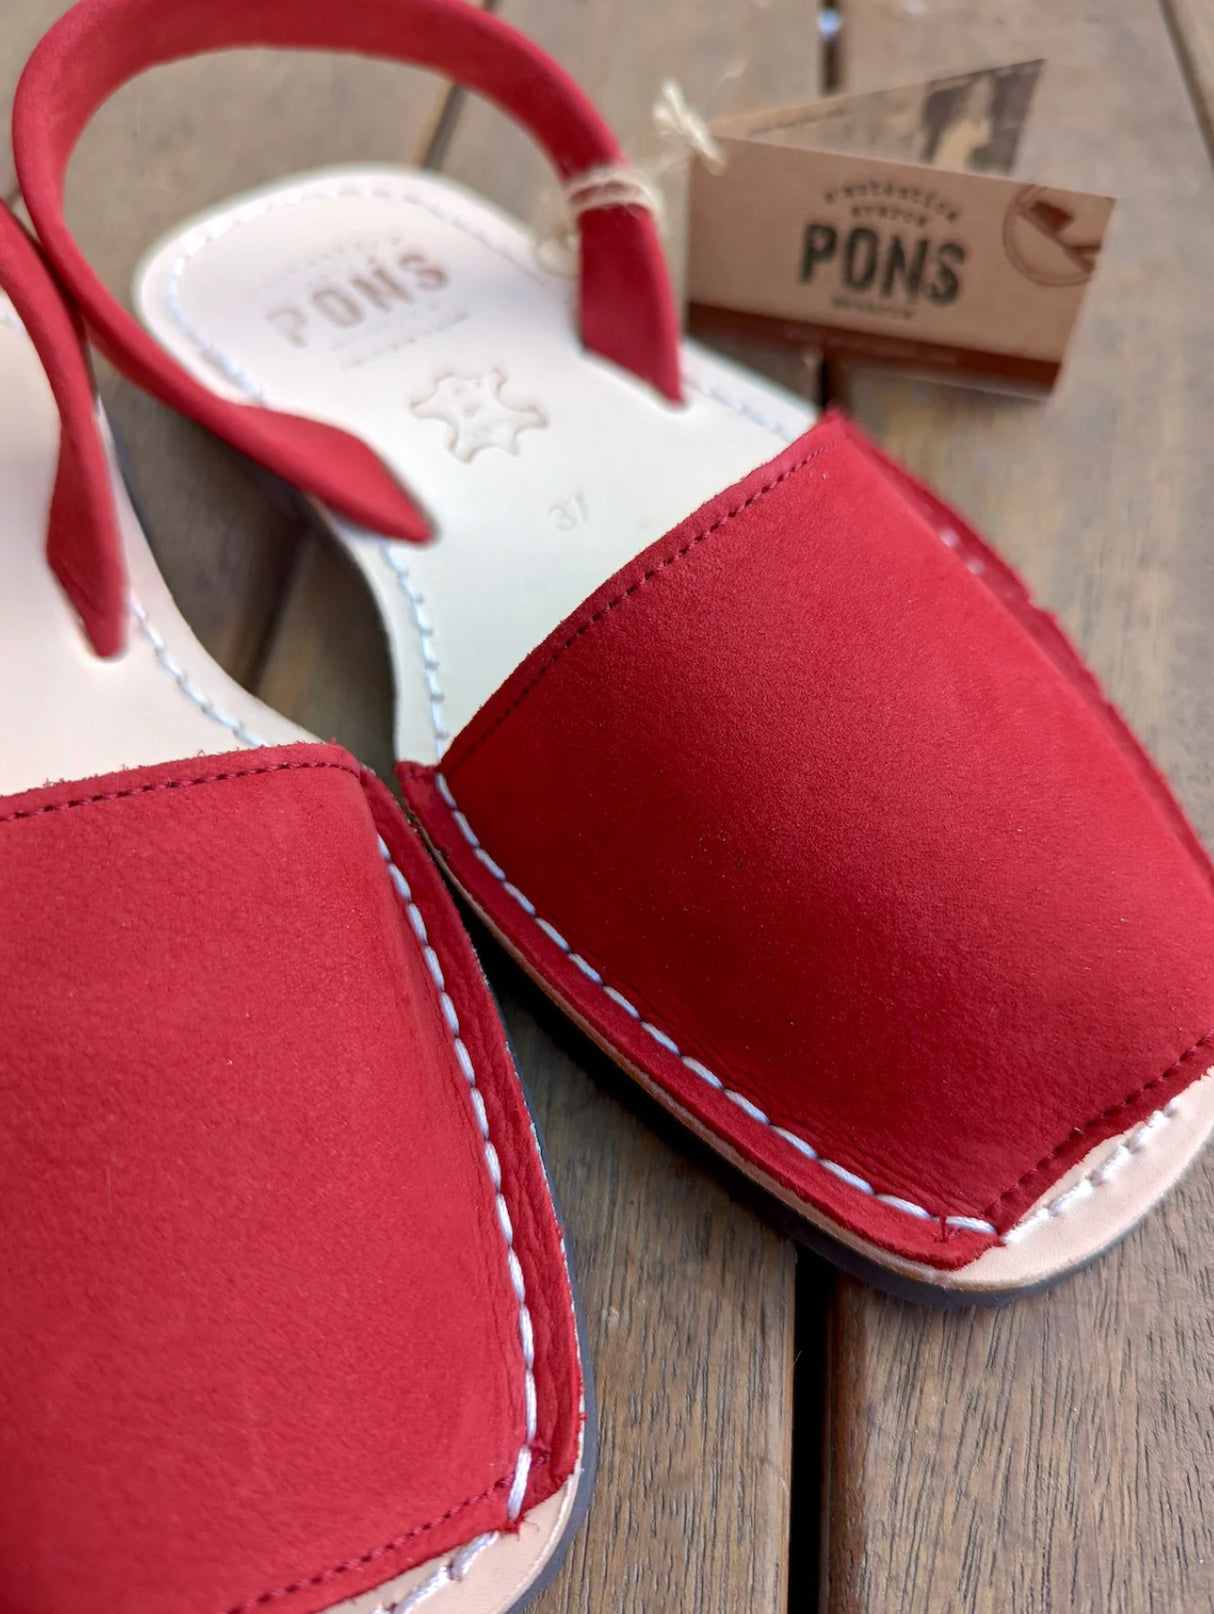 Pons Avarca Menorca Red Sandals (L.B Rosso )